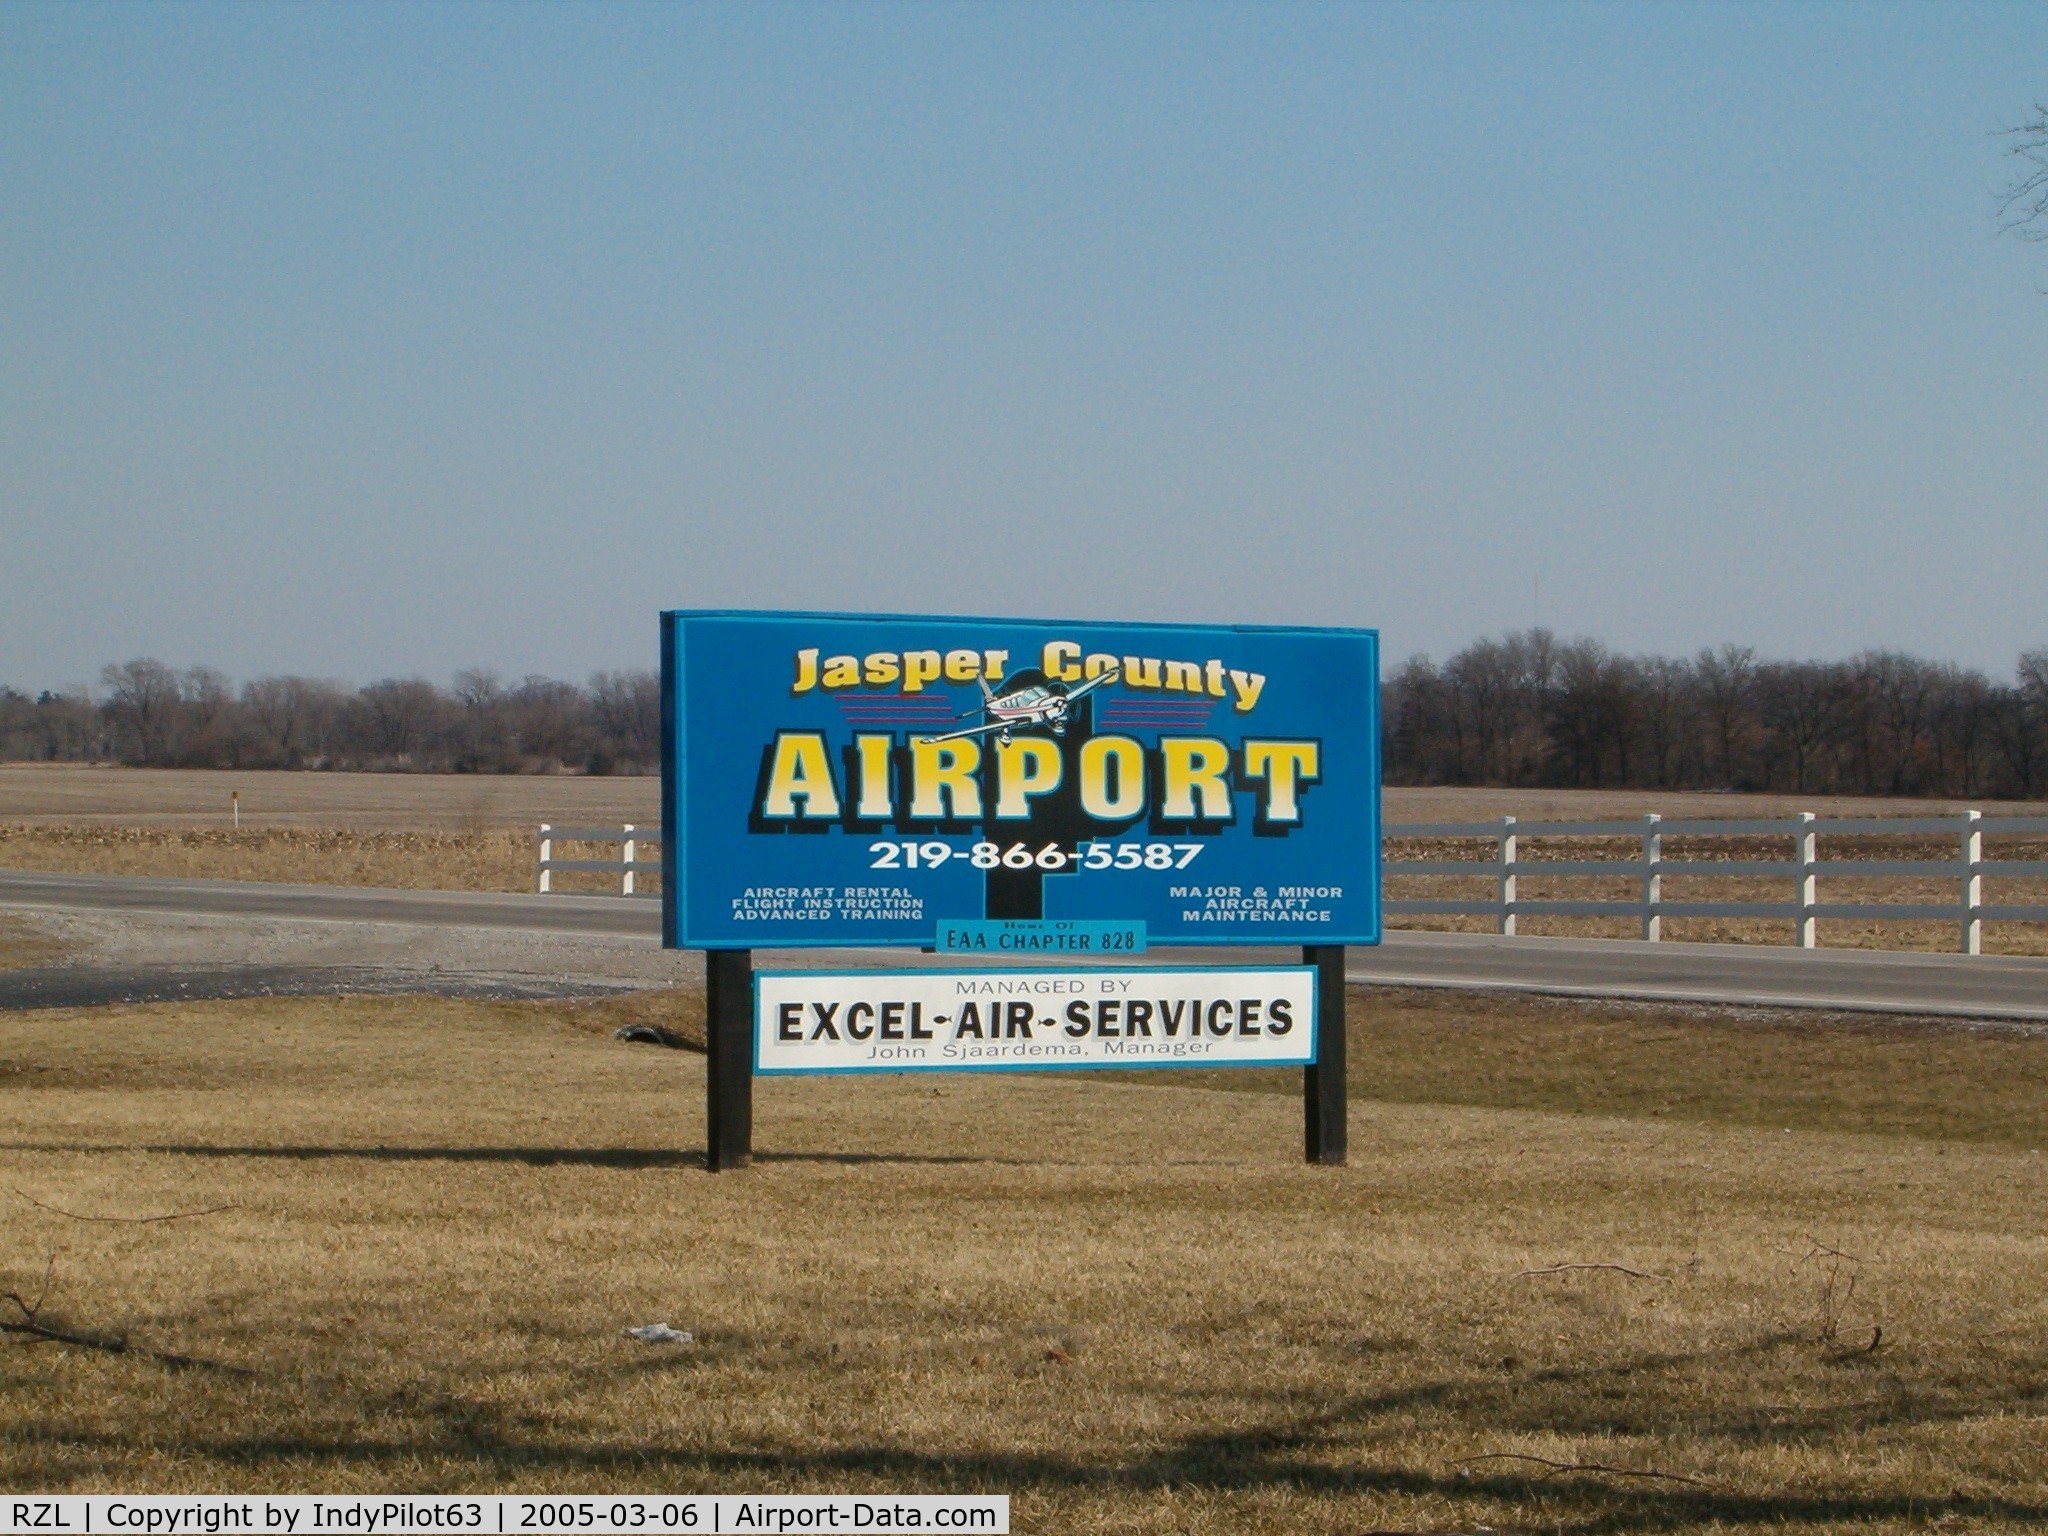 Jasper County Airport (RZL) - sign